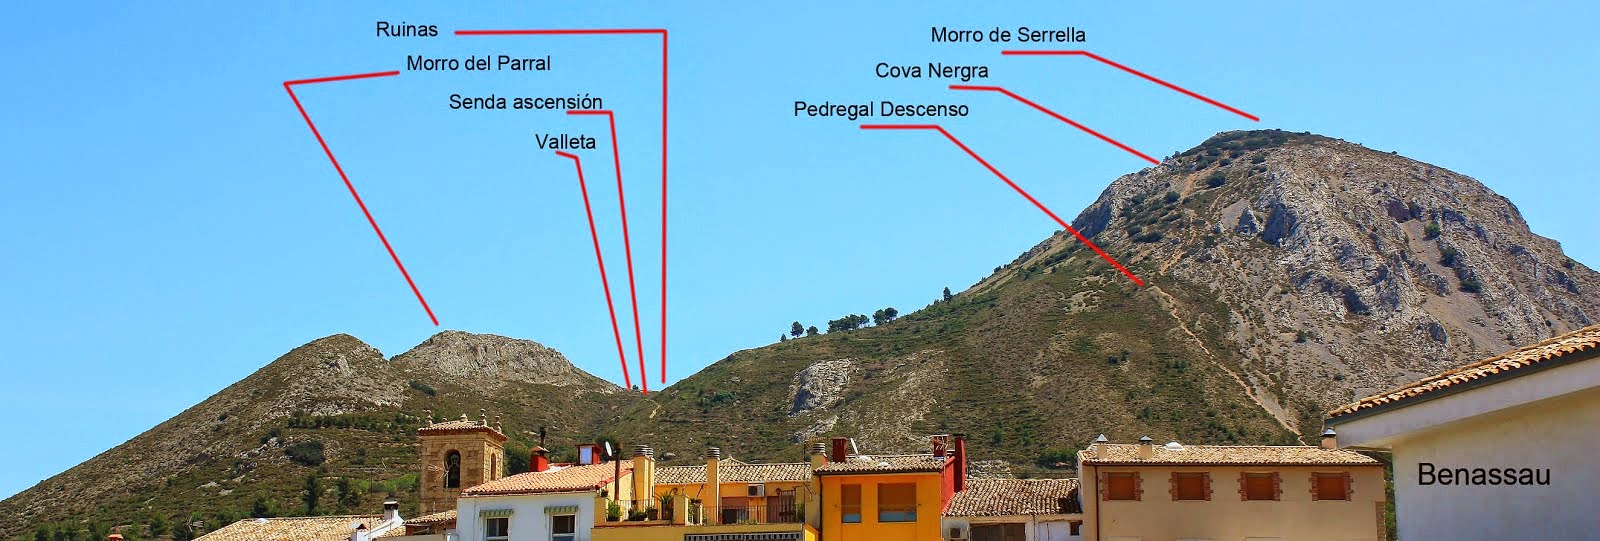 Morro de Serrella